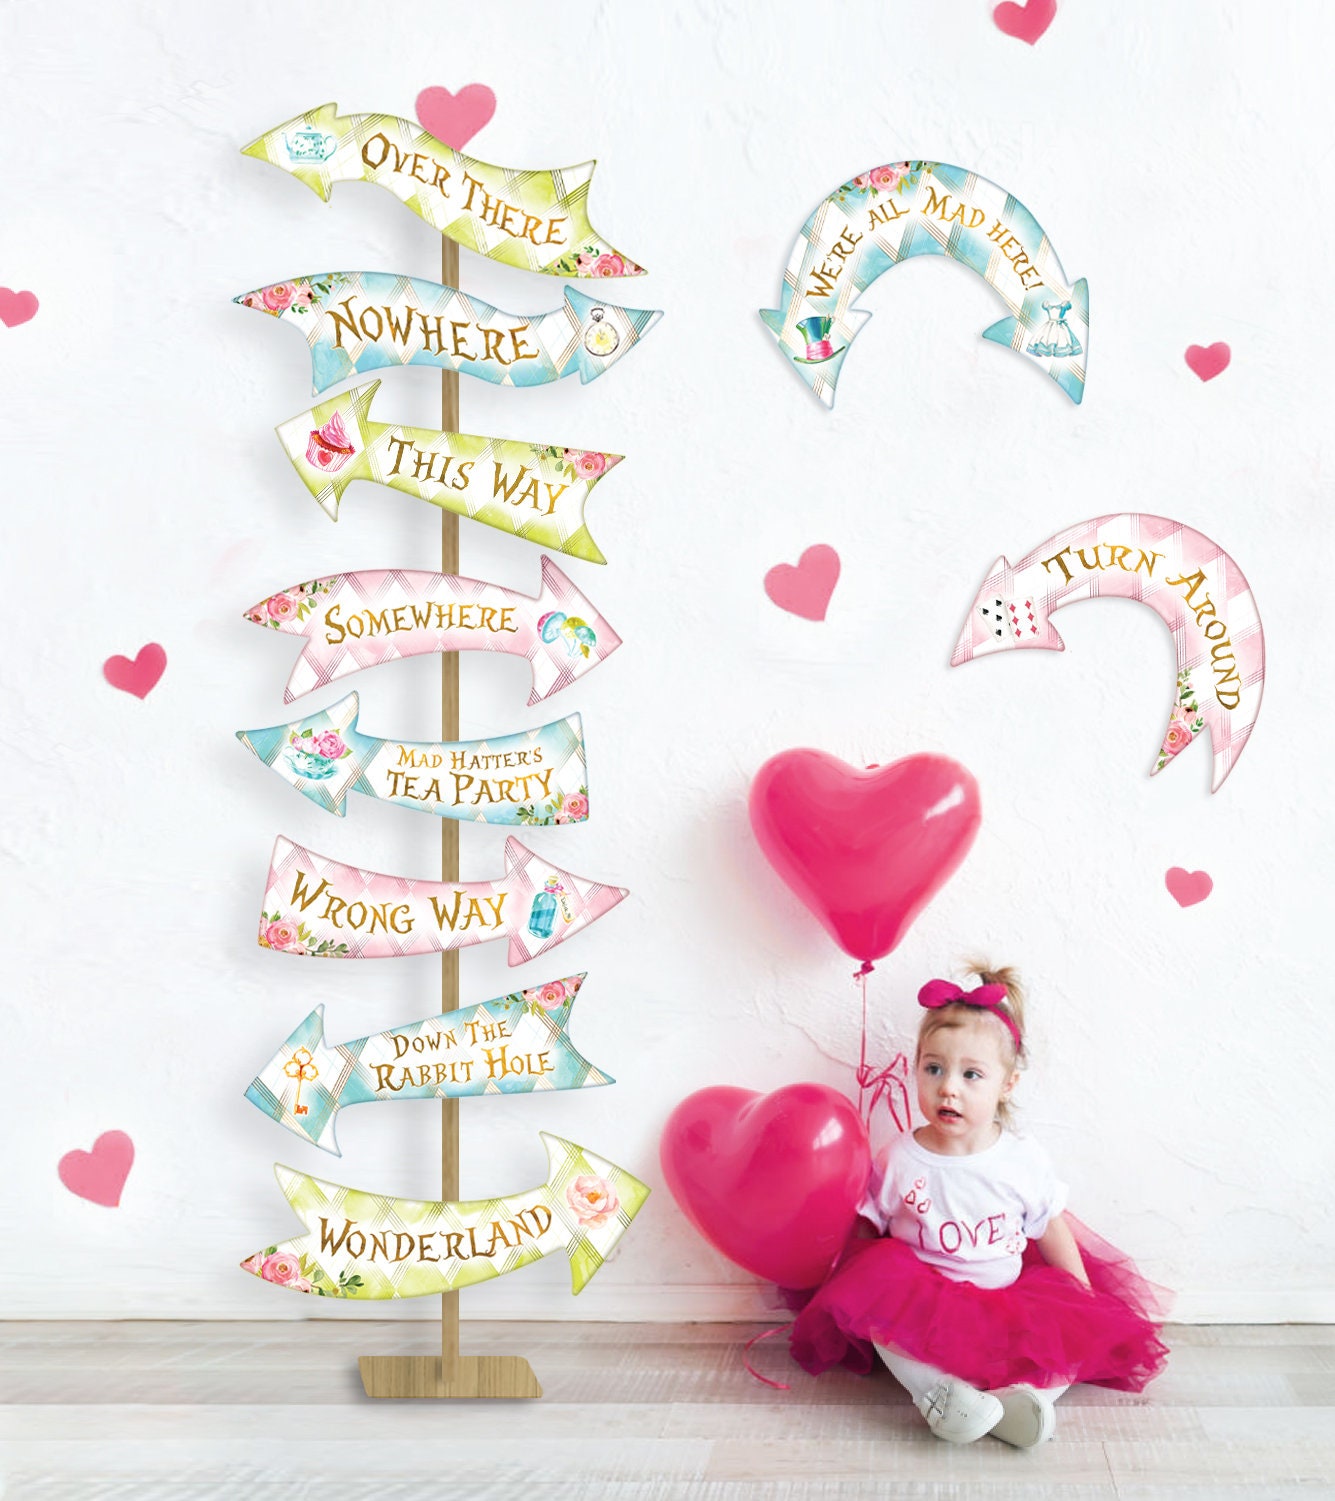 Alice in Wonderland Cupcake Topper Printable – DIY Party Mom